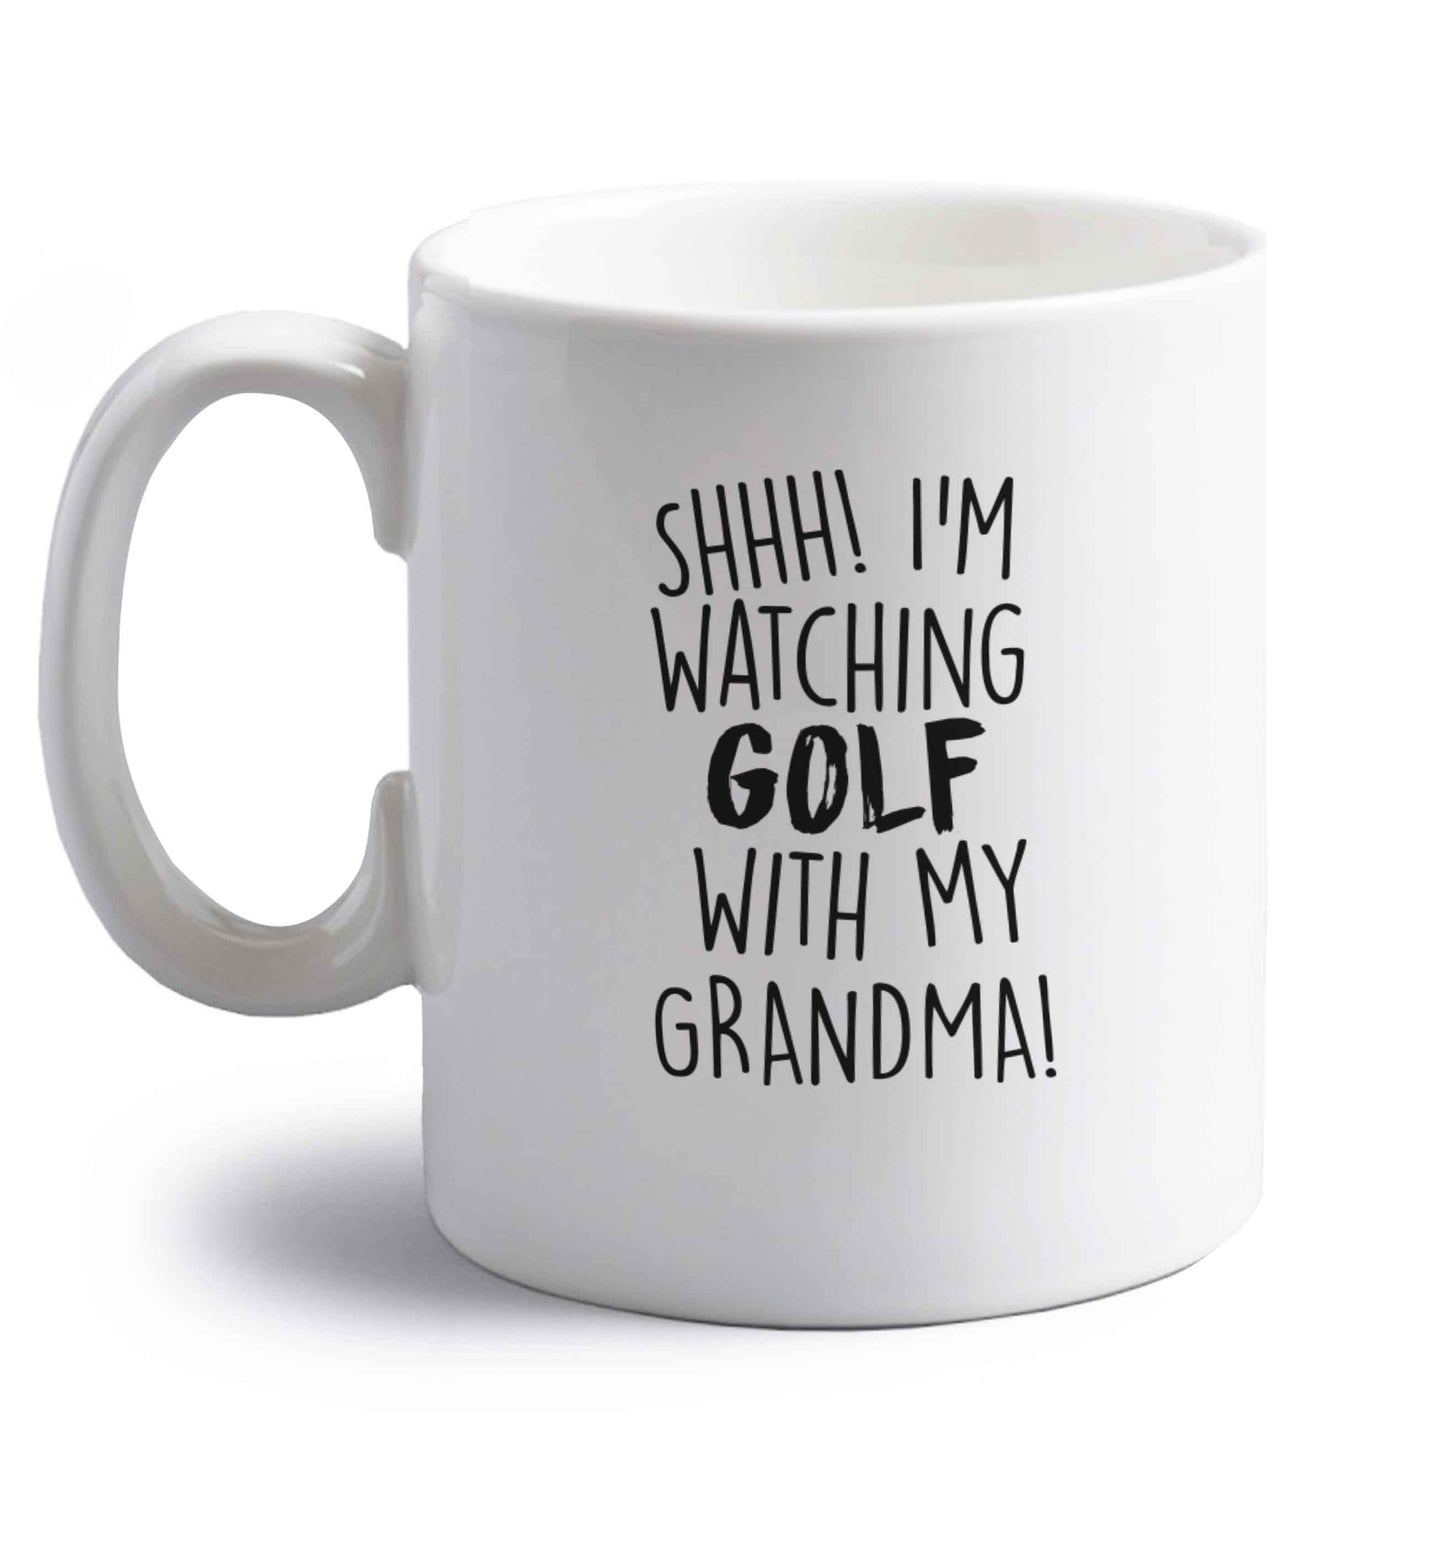 Shh I'm watching golf with my grandma right handed white ceramic mug 